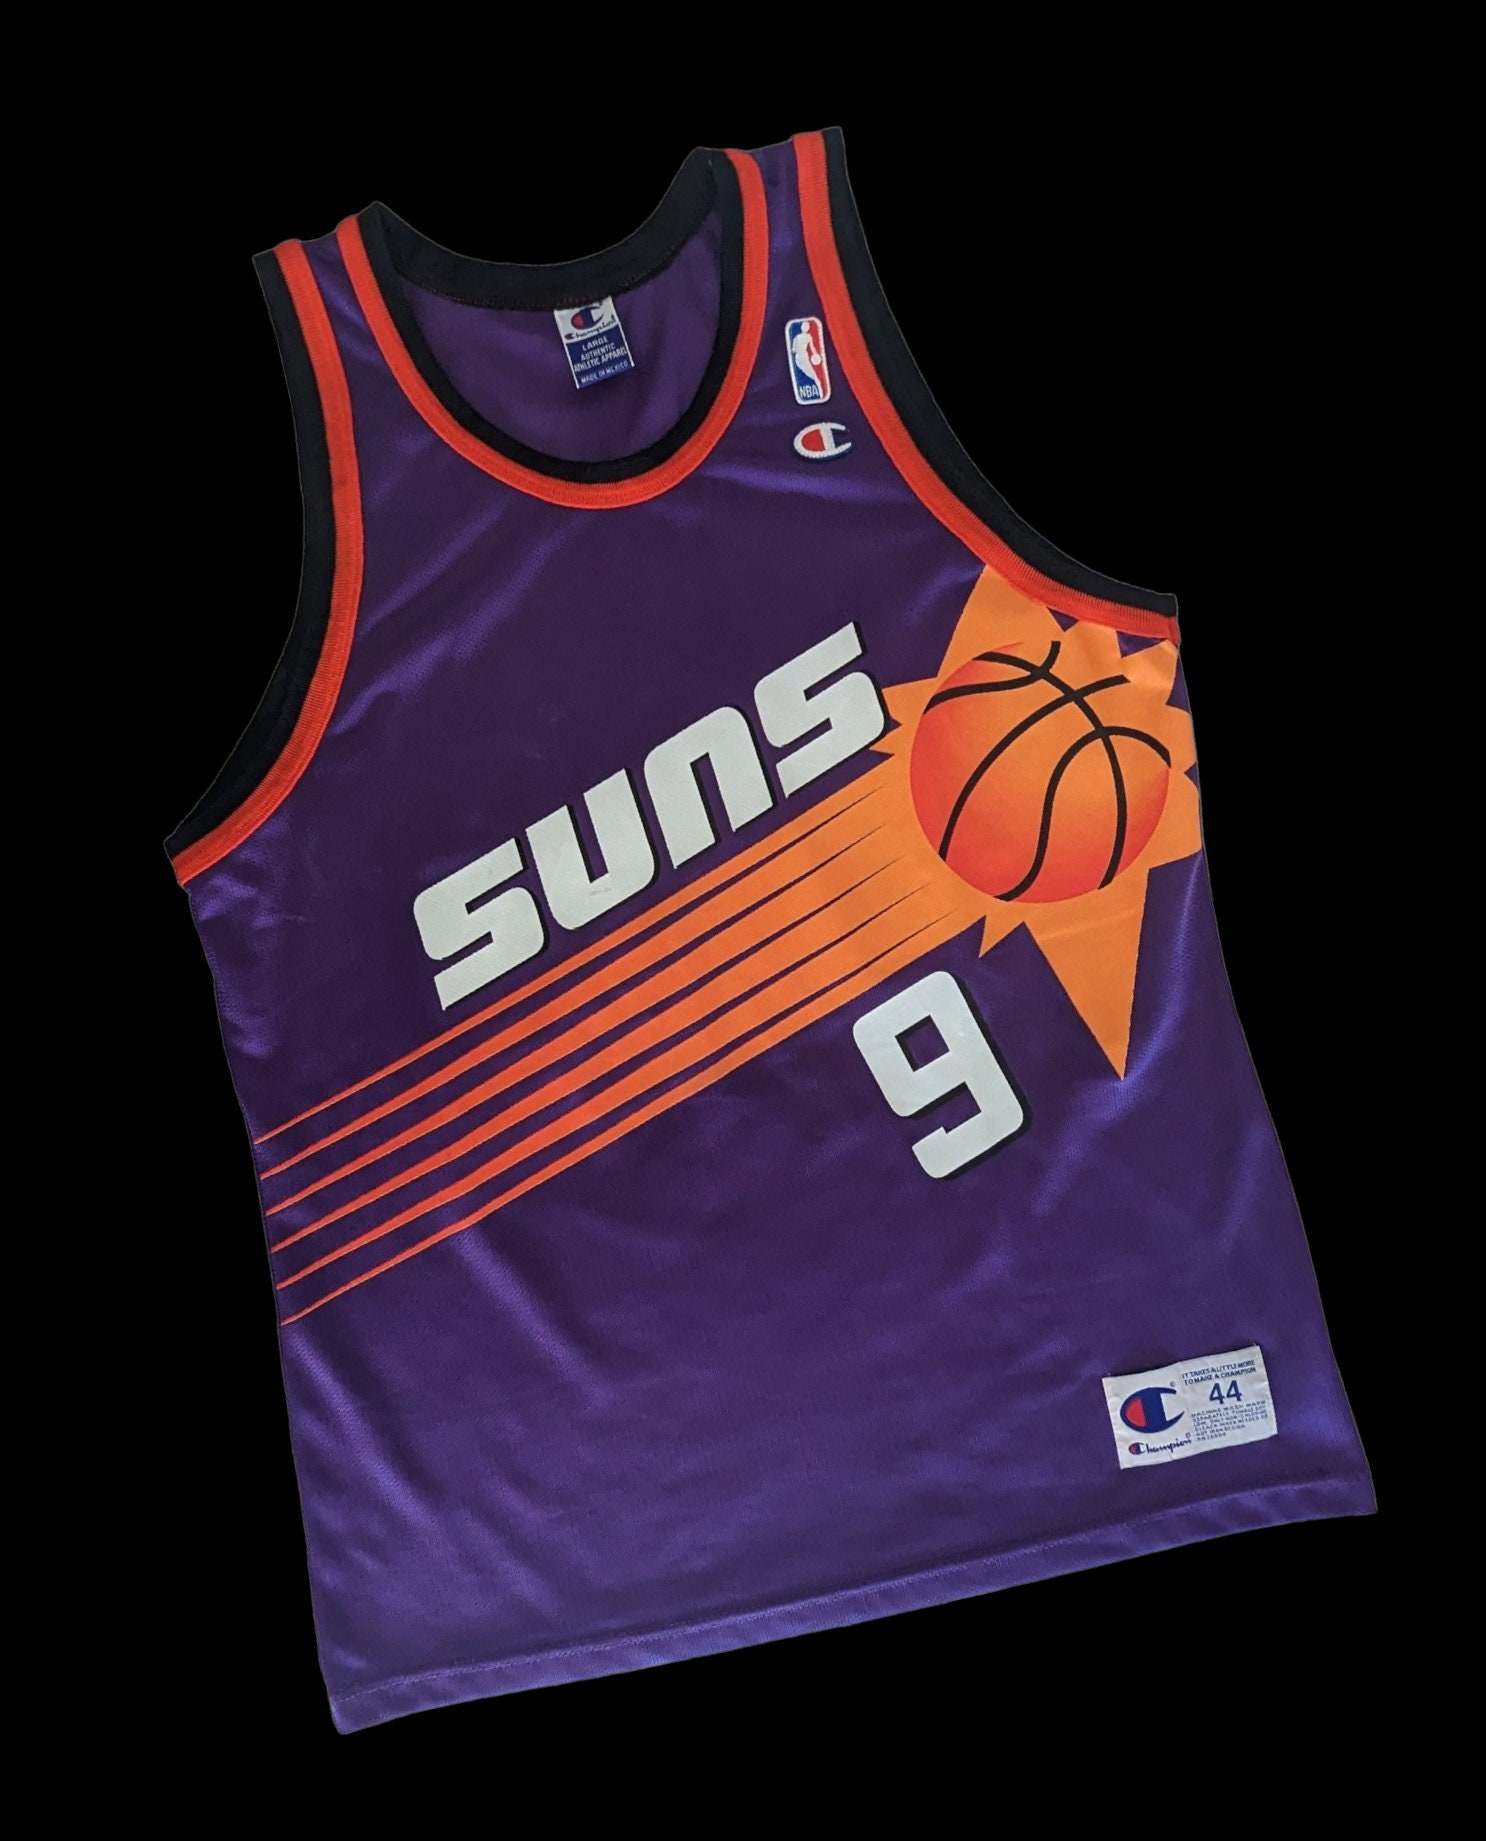 NBA Phoenix Suns Champion Crewneck Sweatshirt M BNWT